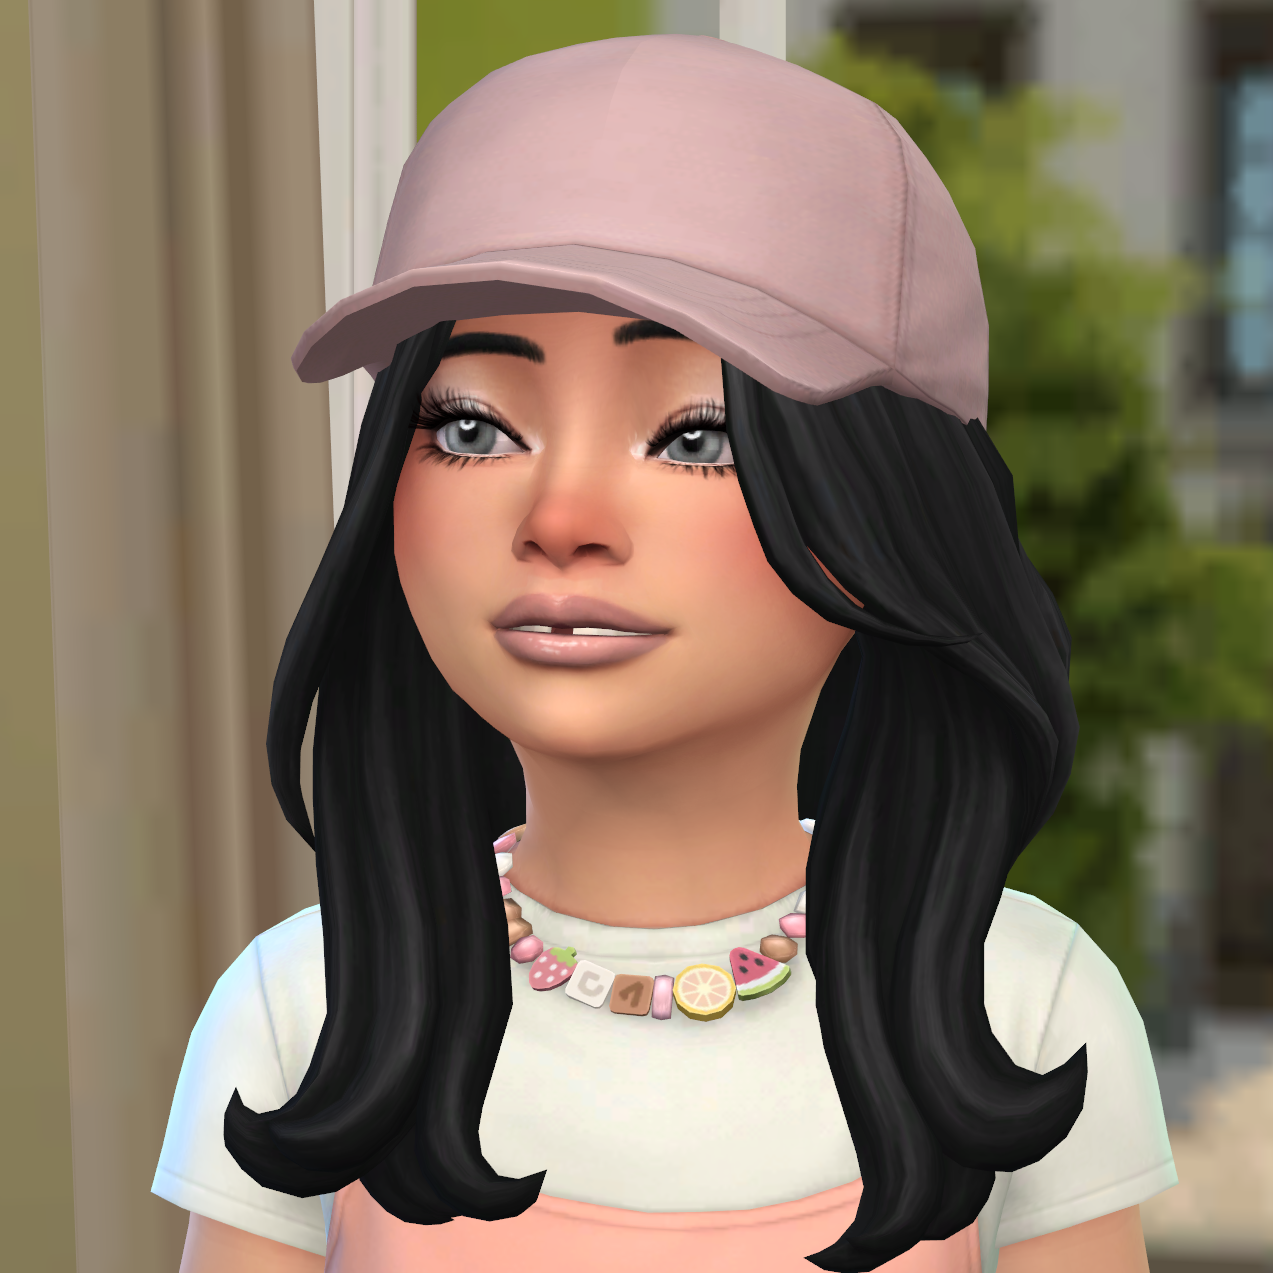 Plain Coloured Hat for Children - The Sims 4 Create a Sim - CurseForge